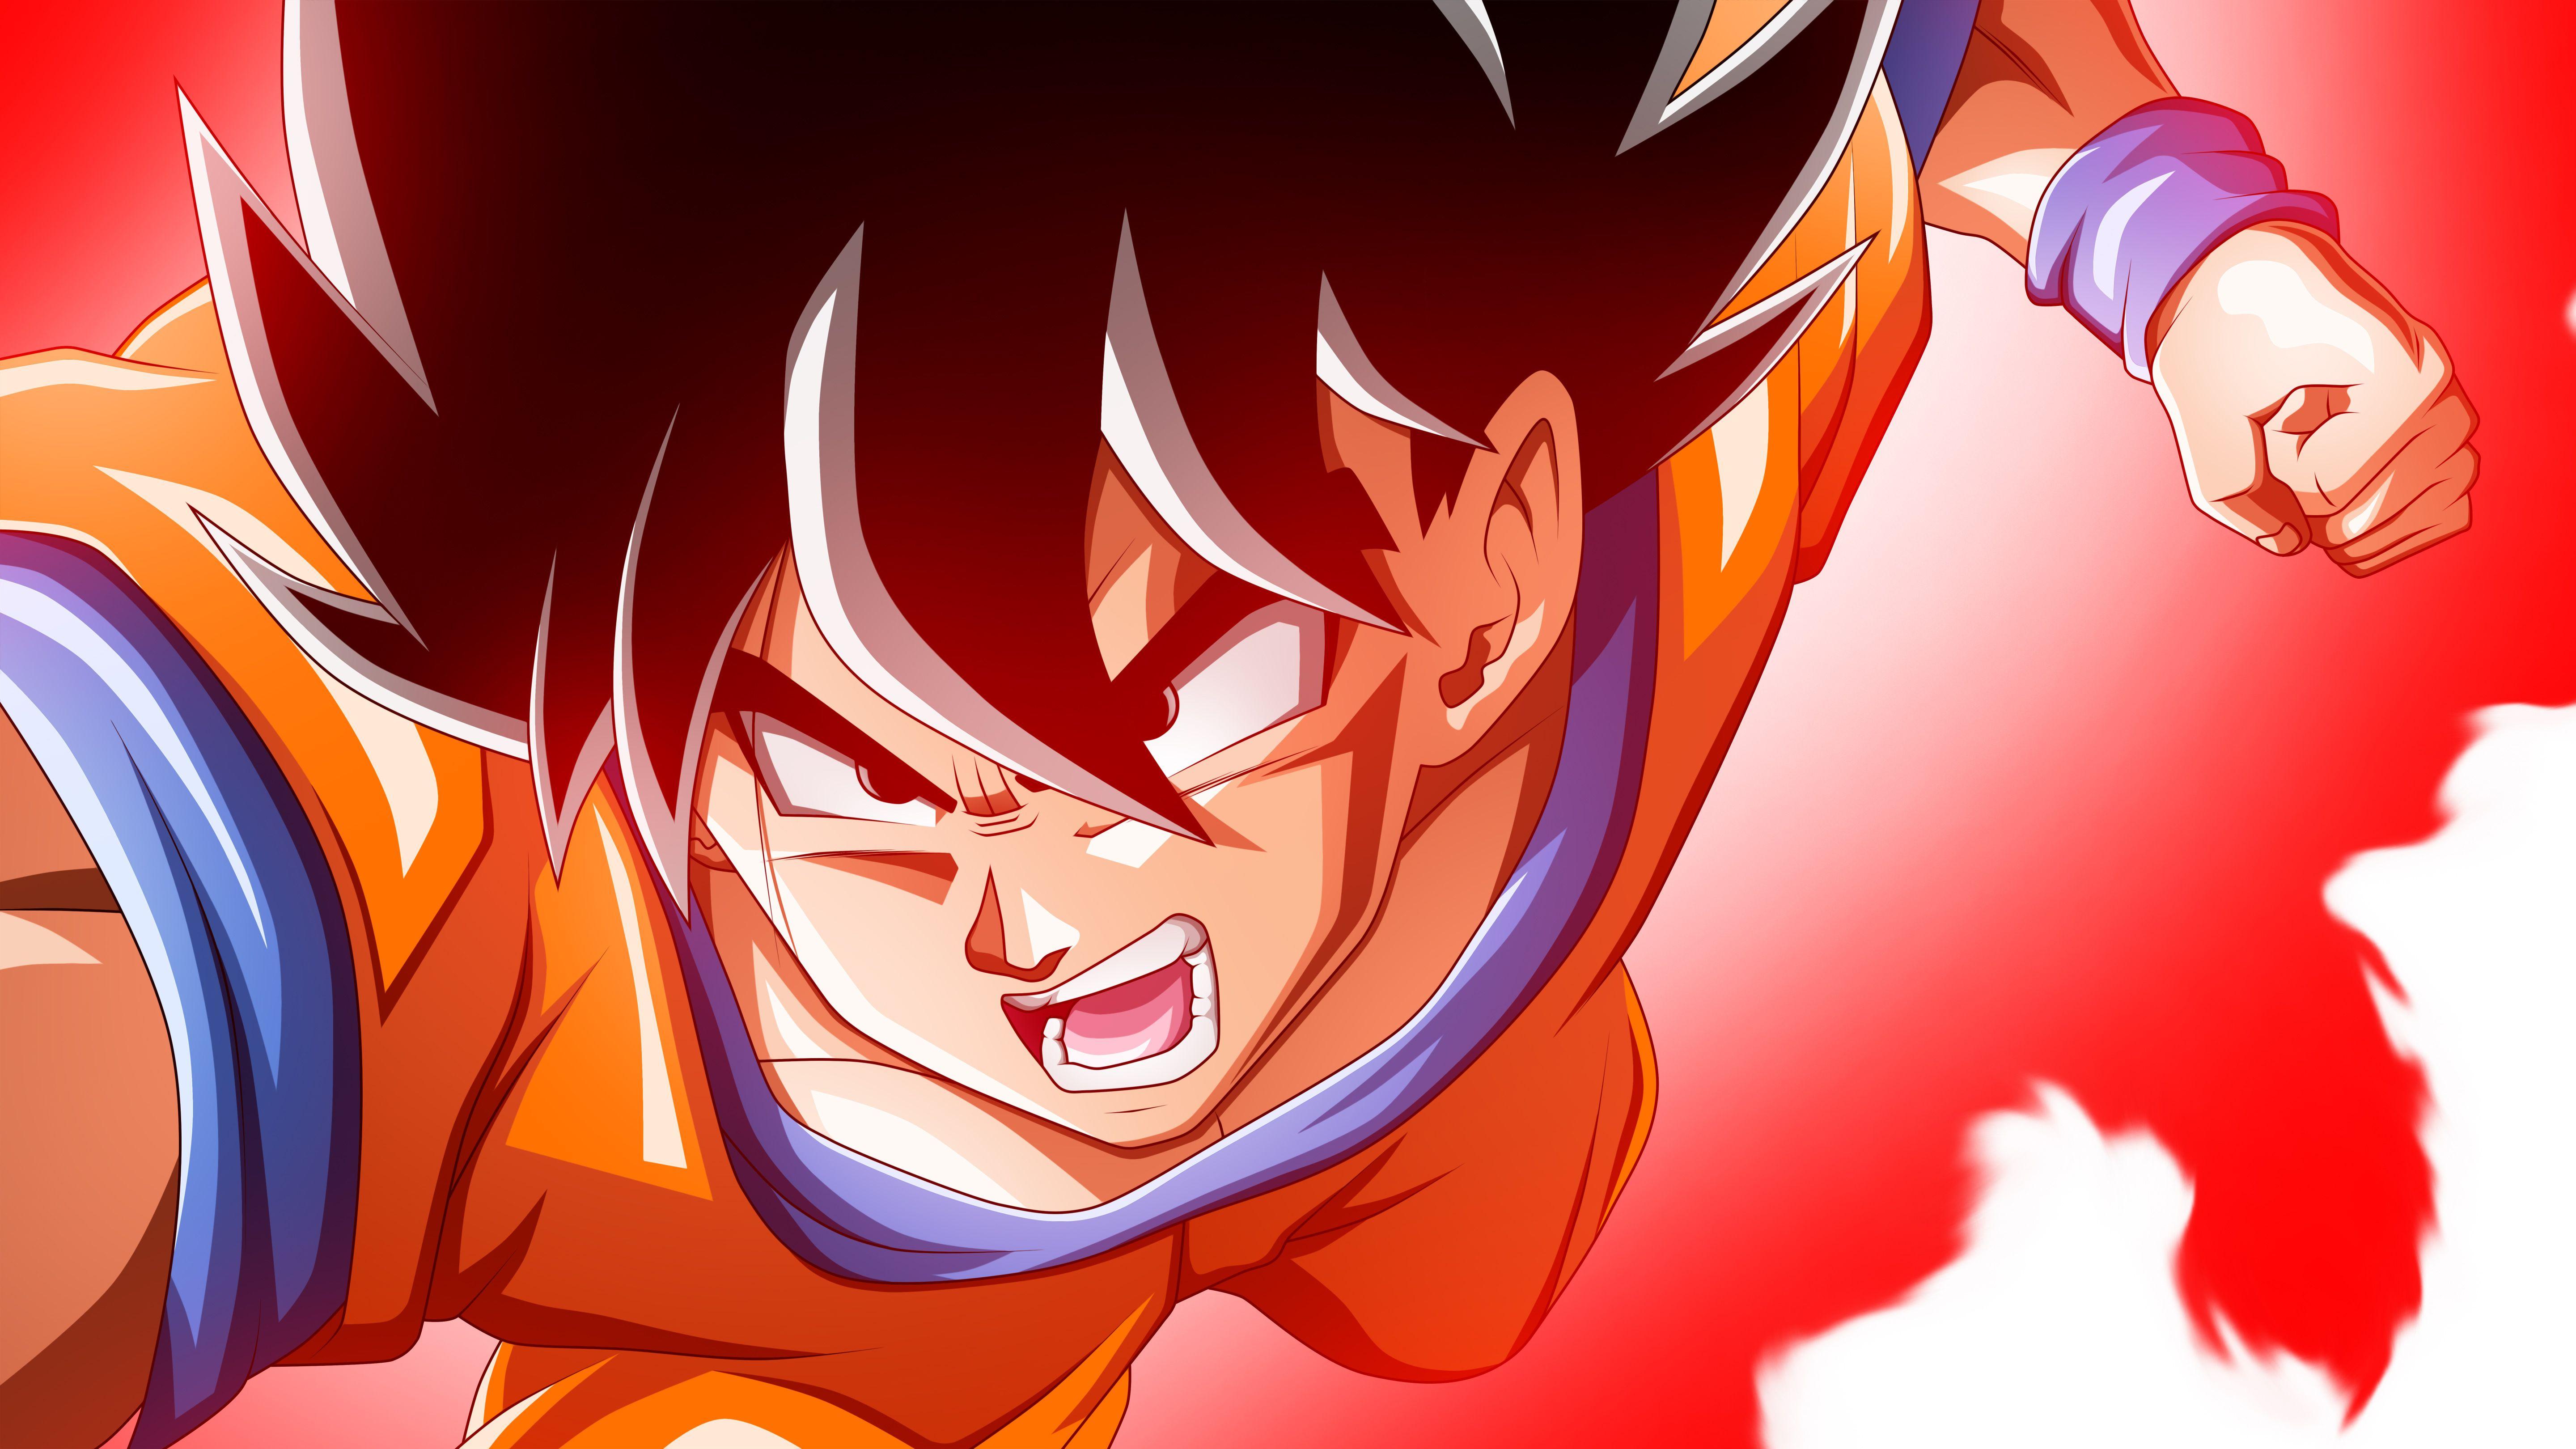 Goku Dragon Ball Z, HD Anime, 4k Wallpapers, Images, Backgrounds